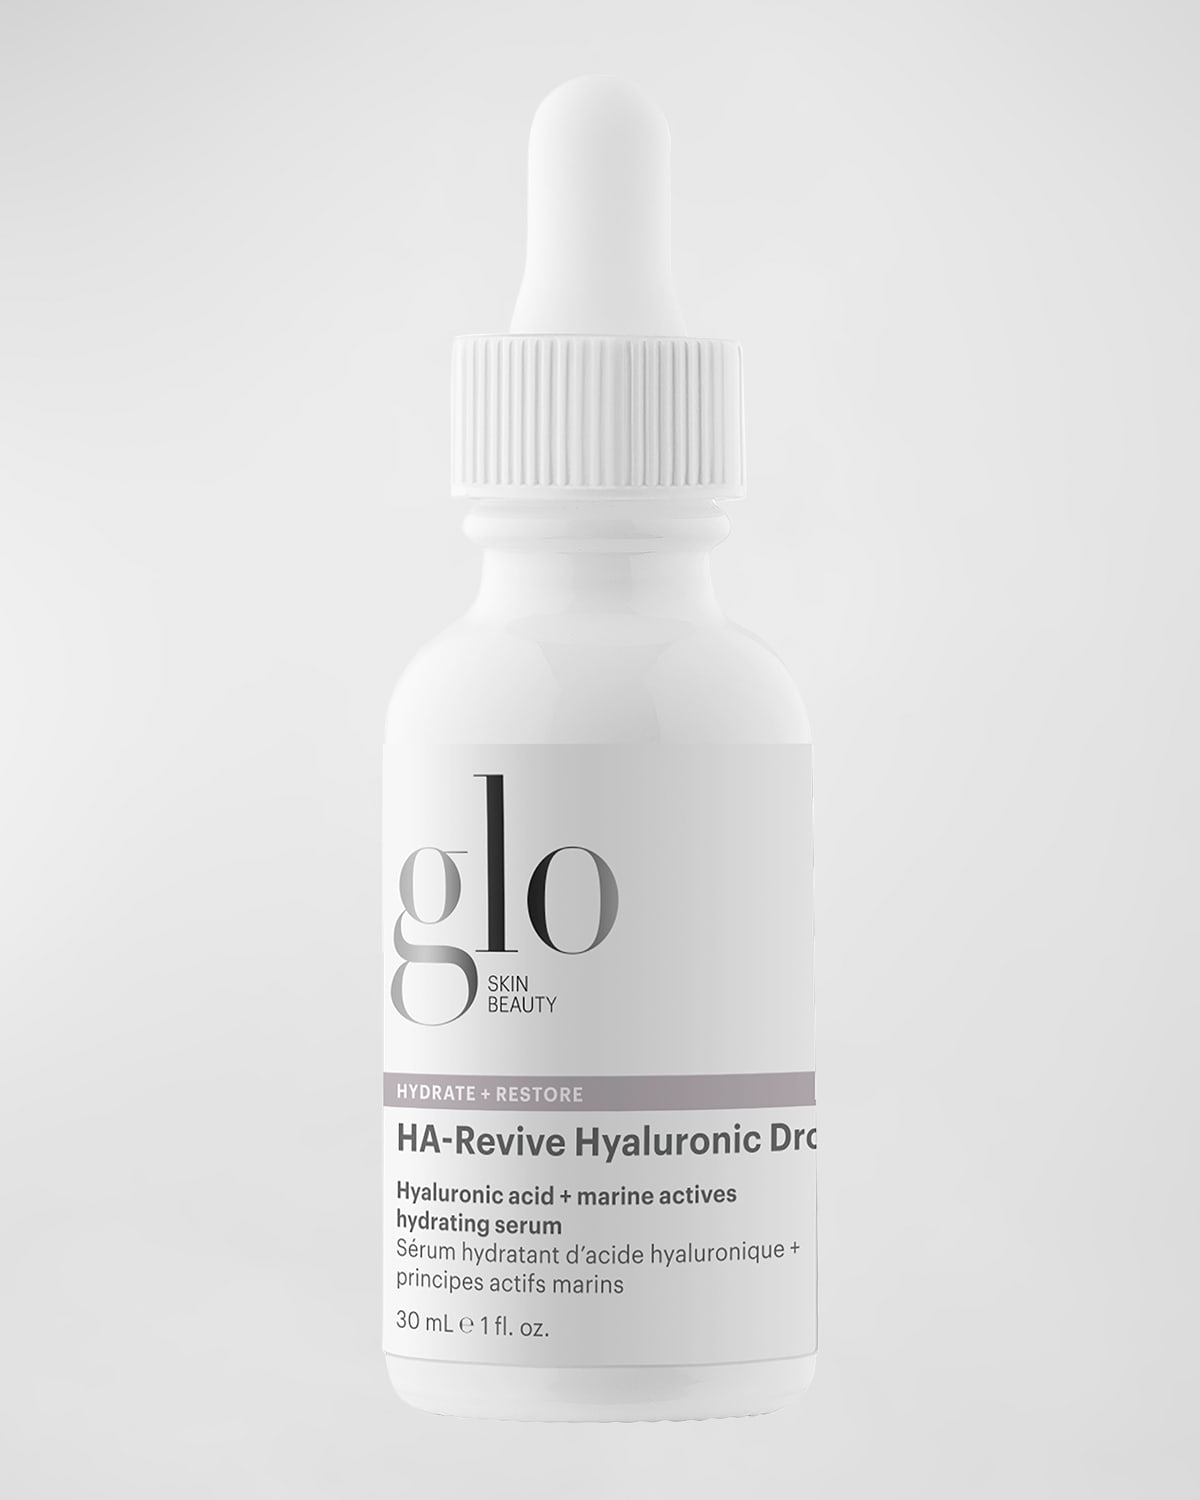 HA-Revive Hyaluronic Drops, 1 oz.